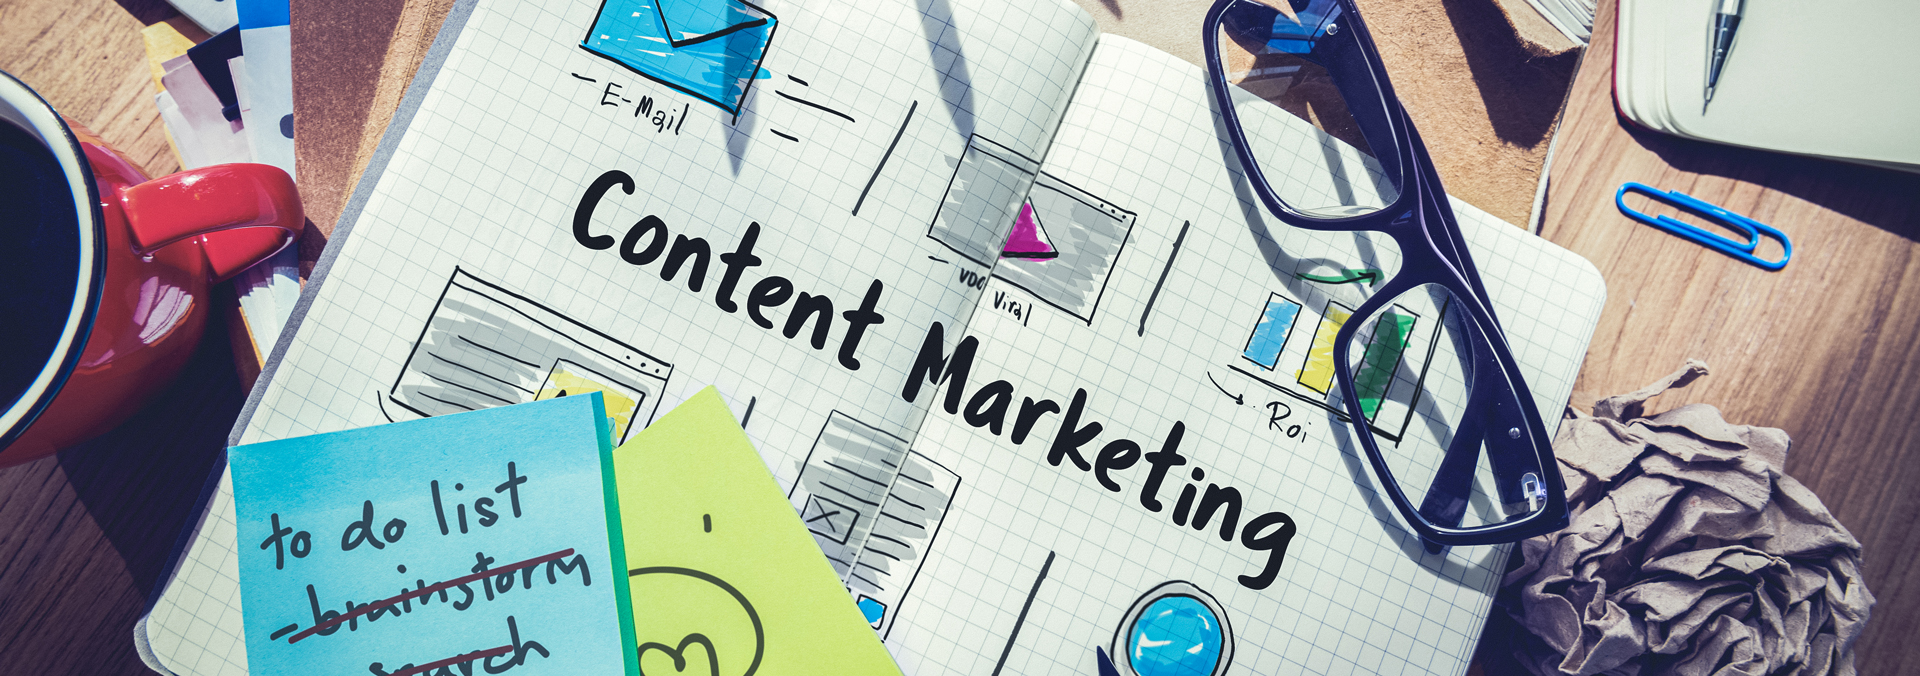 Content-Marketing: Das steckt dahinter